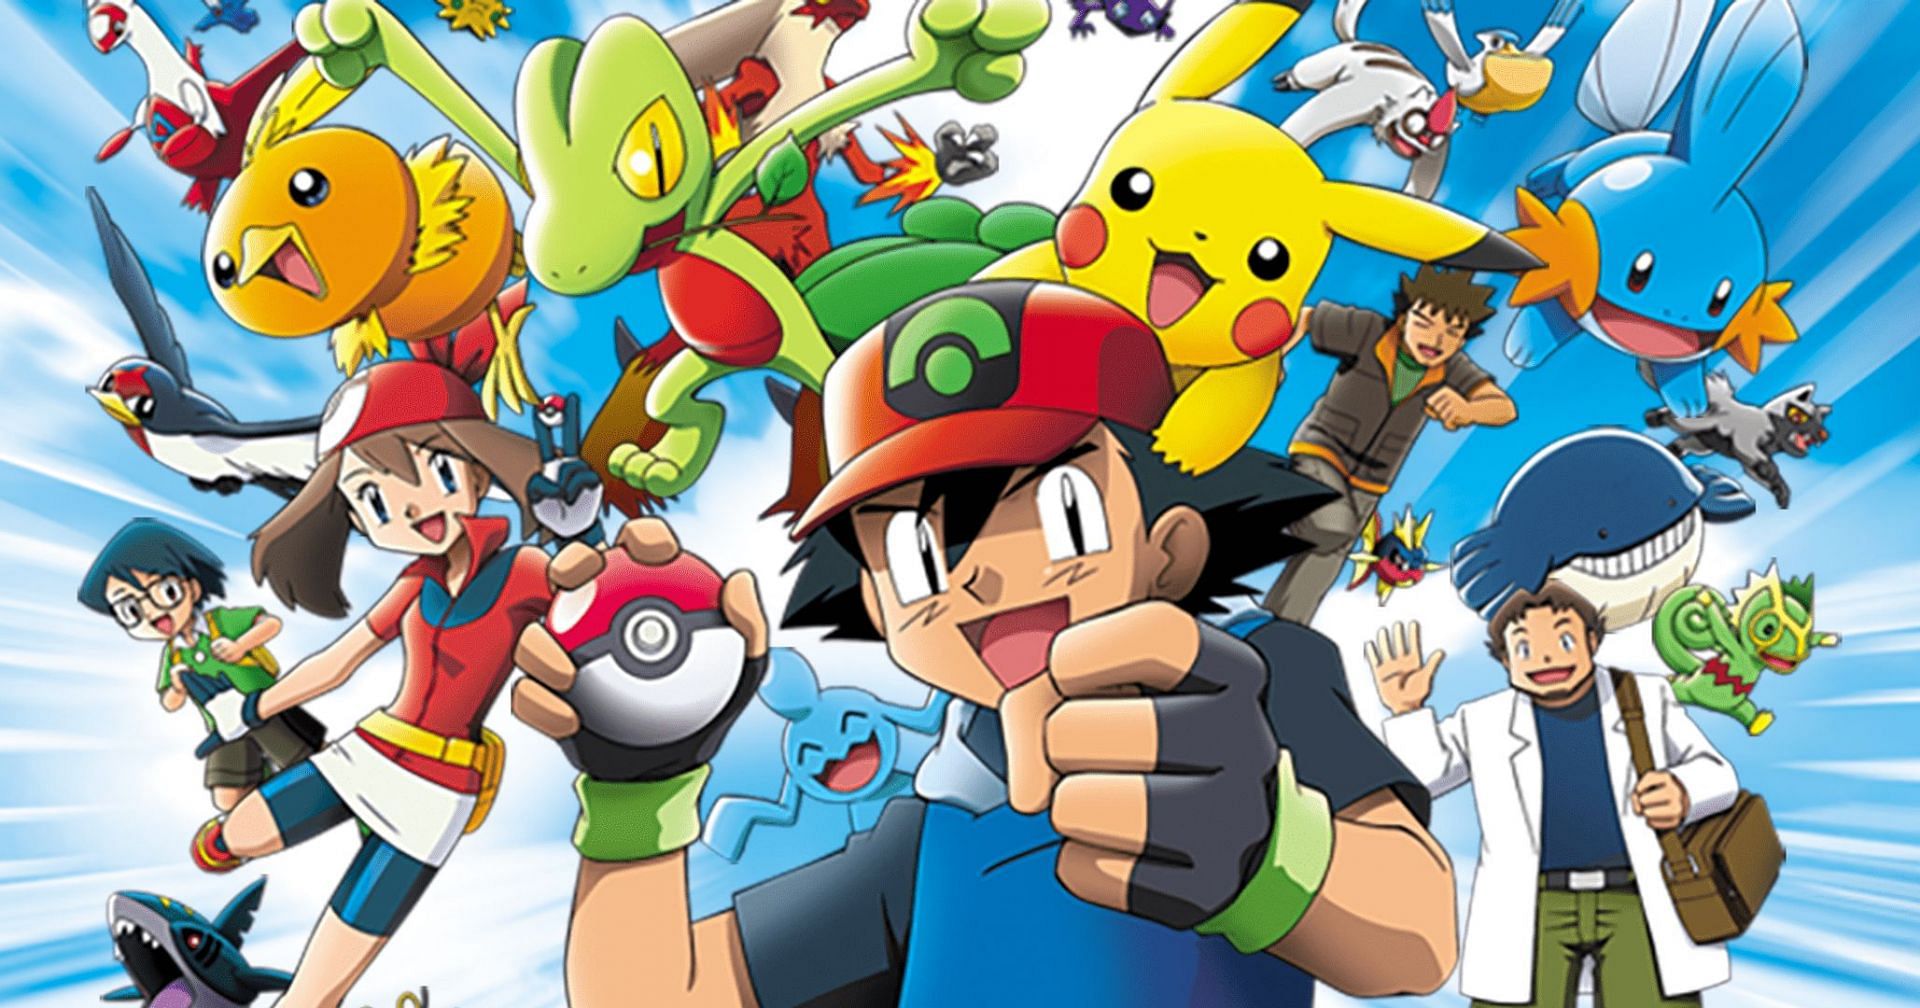 Official artwork for the Advanced season (Image via The Pokemon Company)